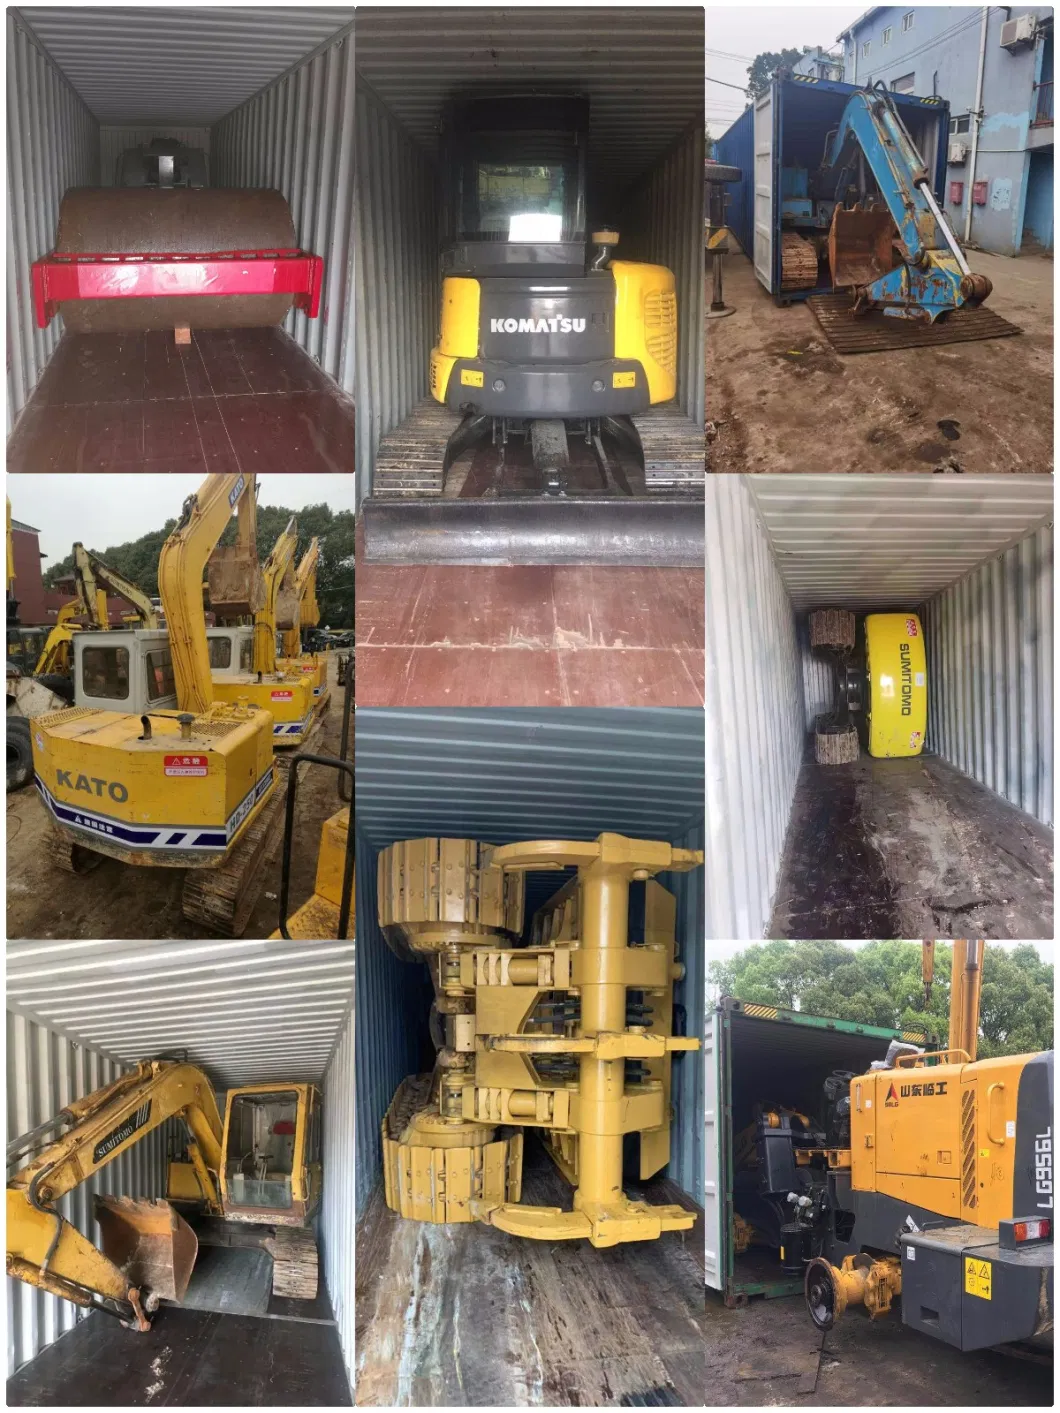 Cheap 0.7 Excavator Japanese Hydraulic Excavator Kato HD700, Cat E200b, Sumitomo S280 for Sale